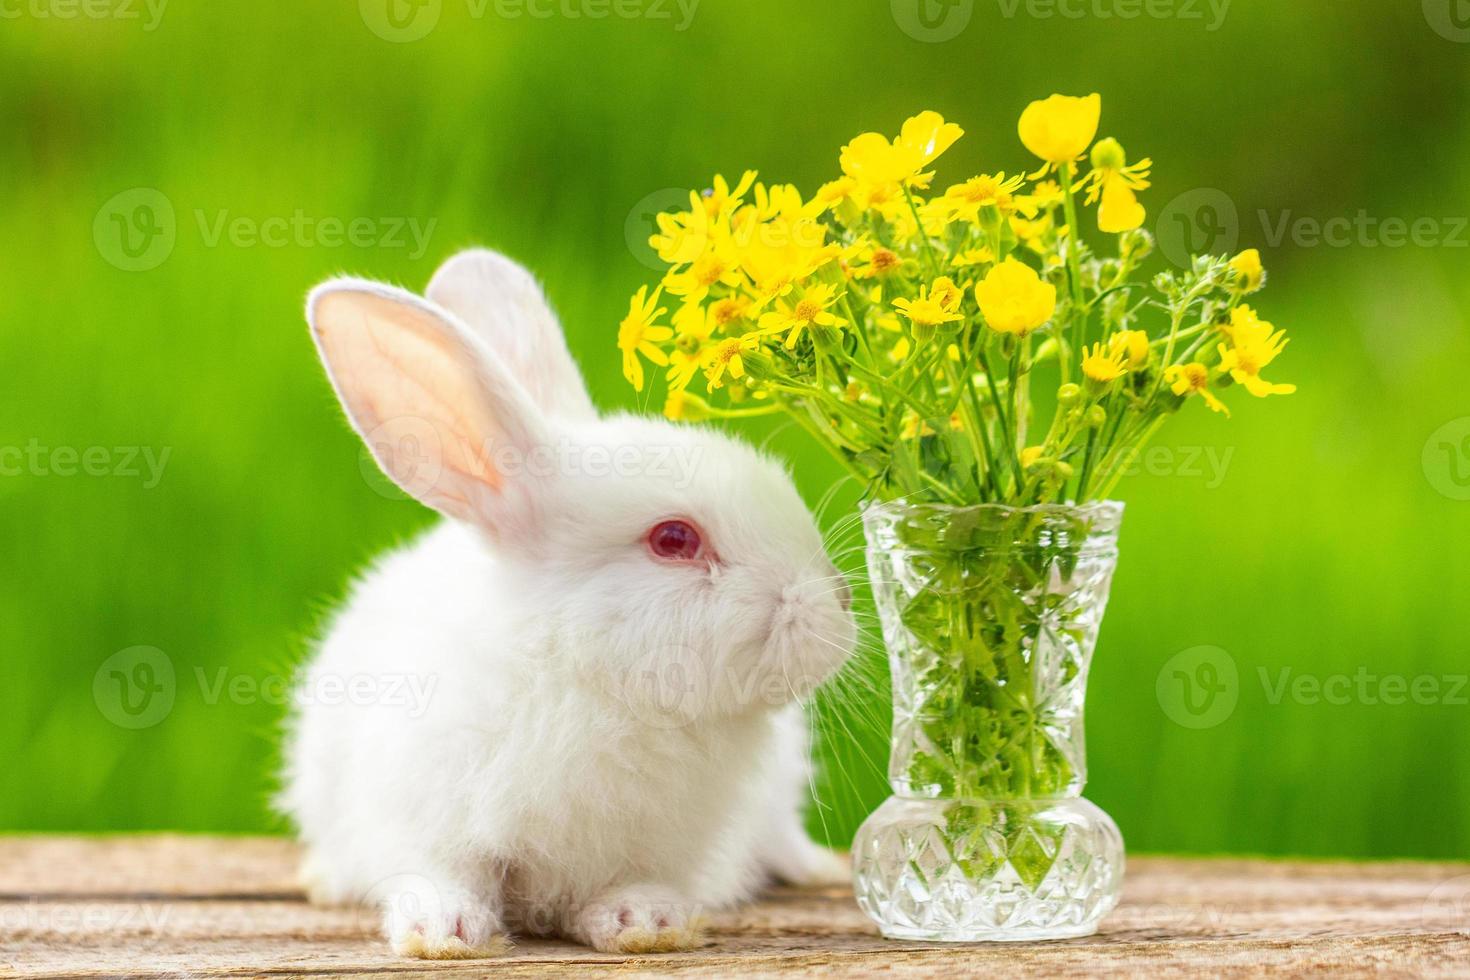 rolig vit örat liten kanin på en trä- bakgrund med en bukett av blommor på en solig dag i natur foto